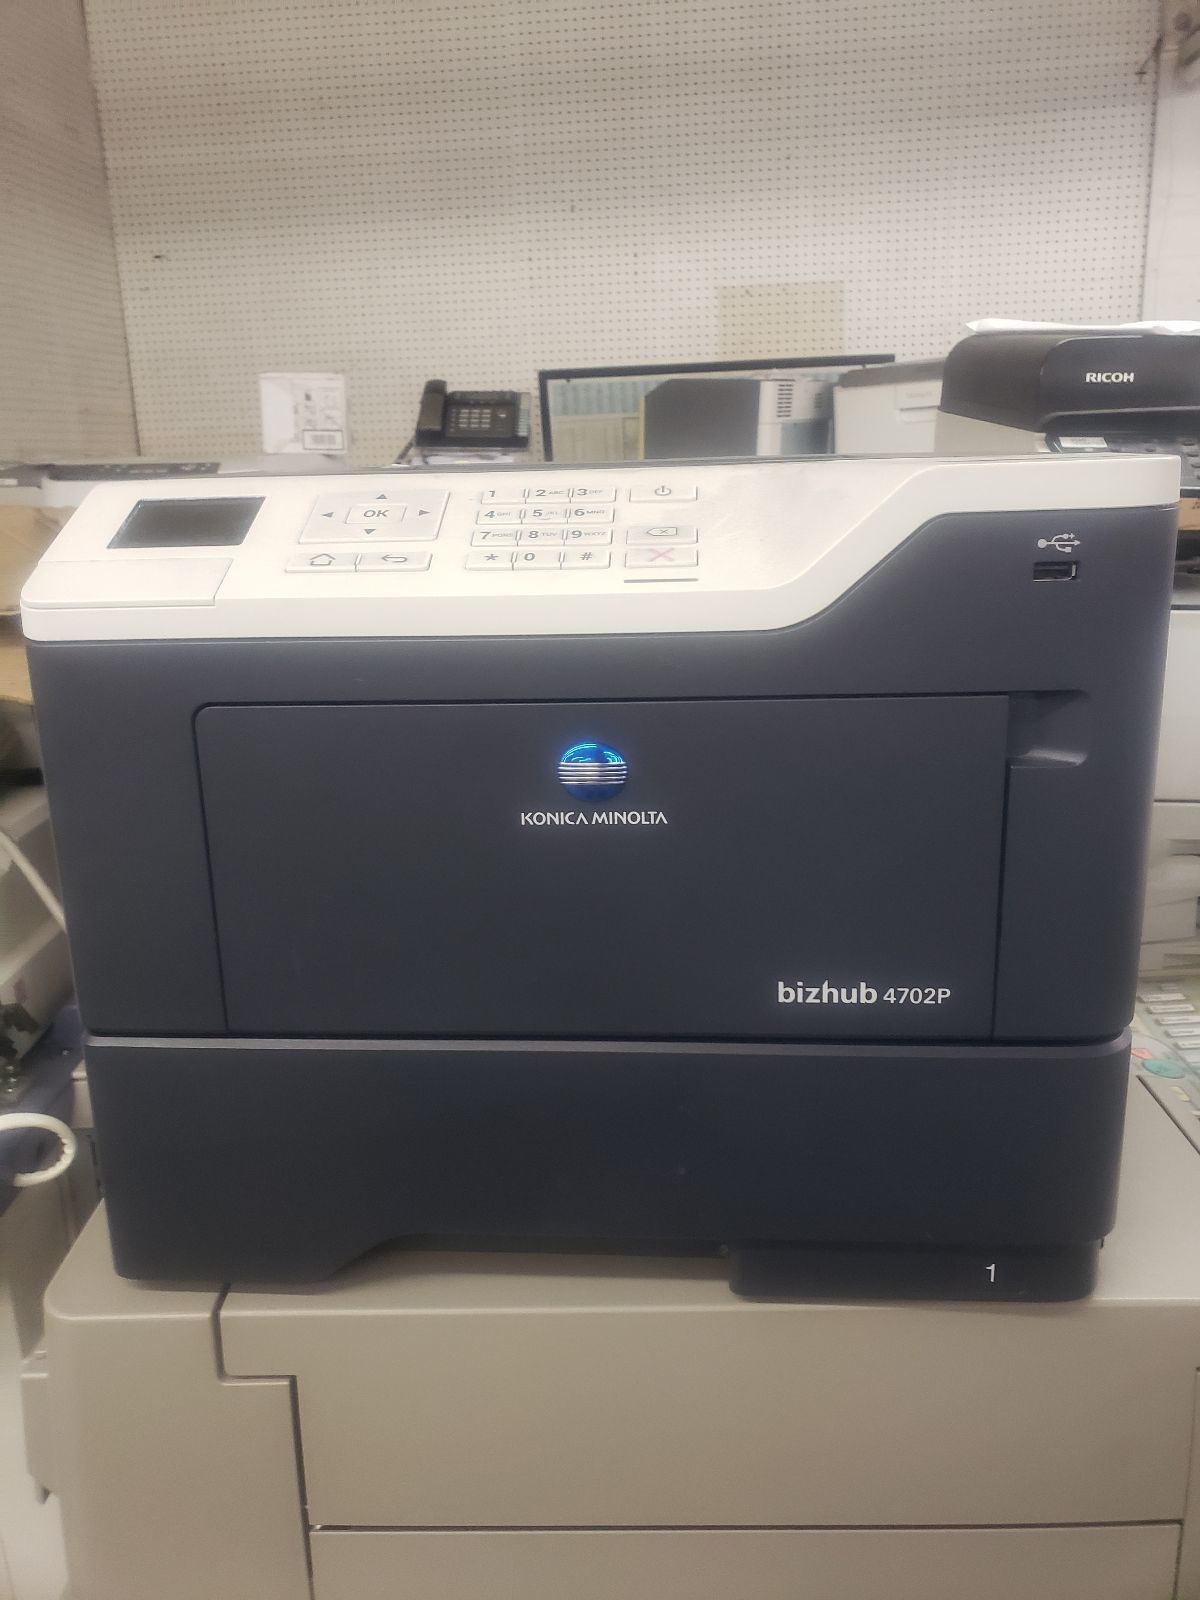 Konica Minolta Bizhub 4702P Laser Printer - $449.00